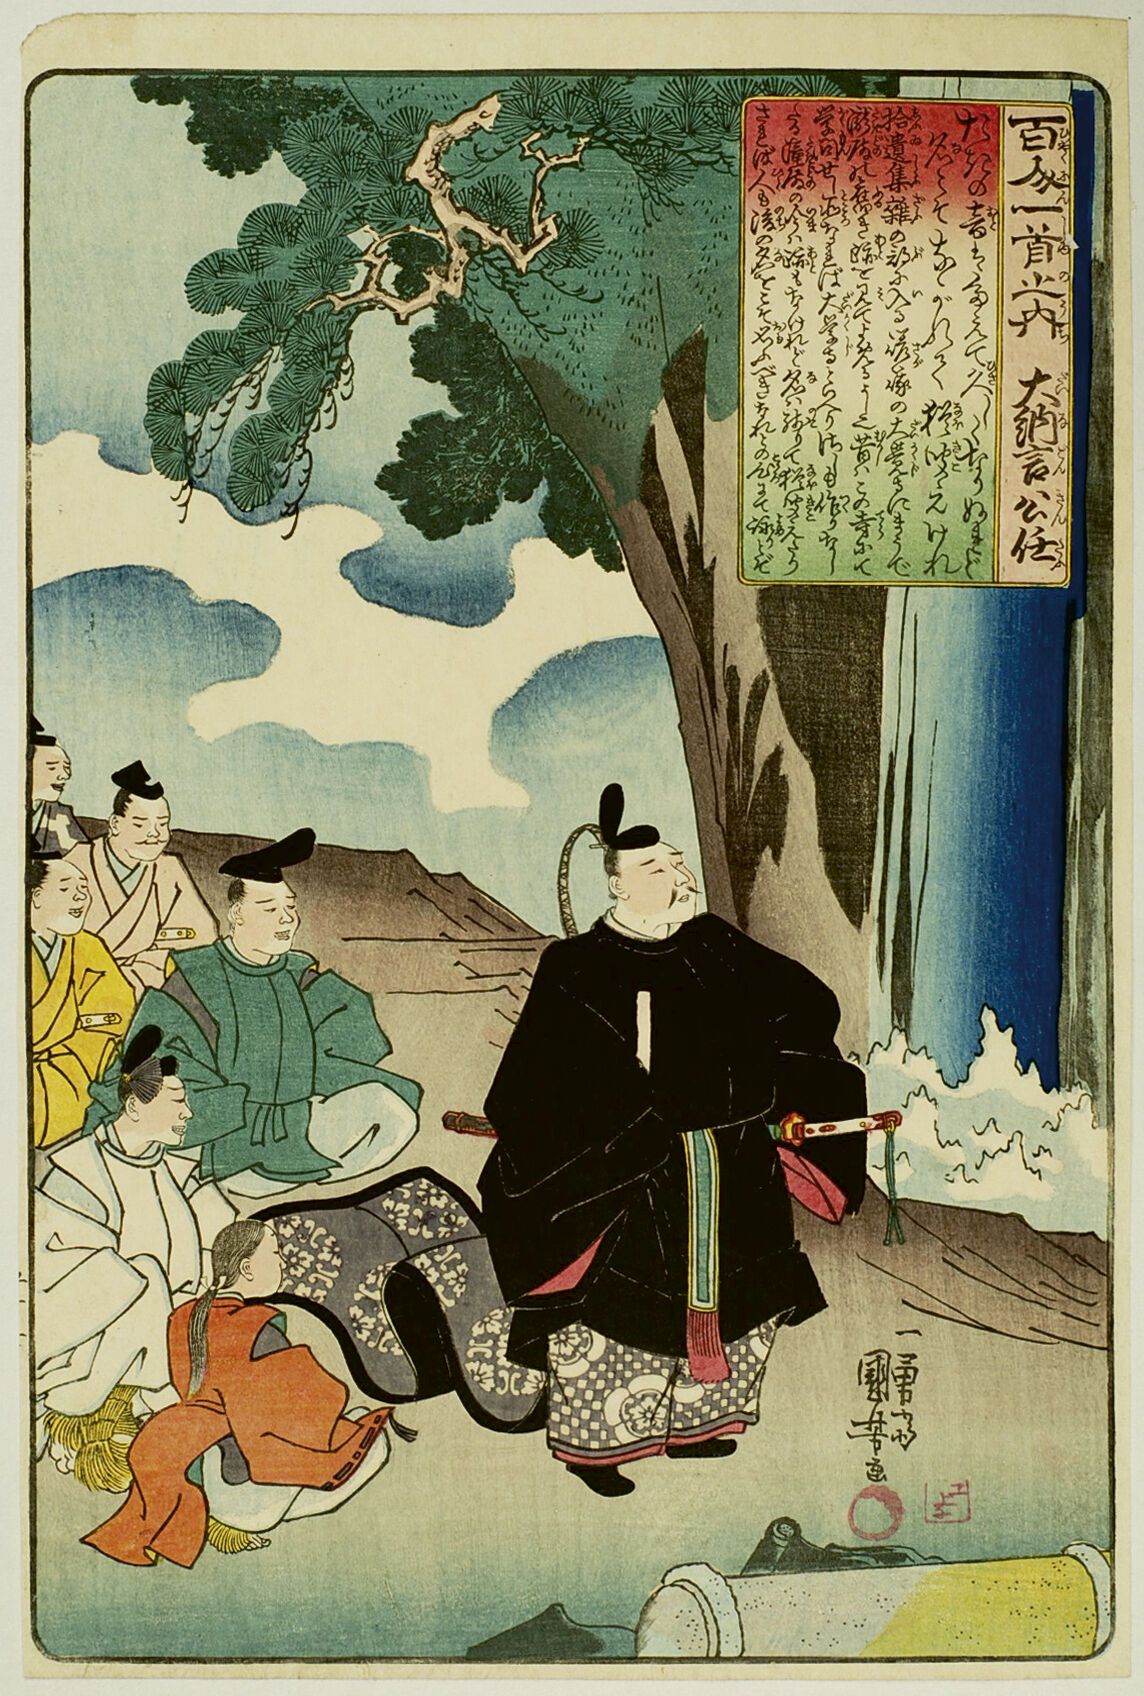 Null 宇多川国芳 (1797-1861)
百人一首》系列中的 "Oban tate-e"，板块为Dainagon Kintô，诗人和他的随从在大瀑布和松树旁&hellip;